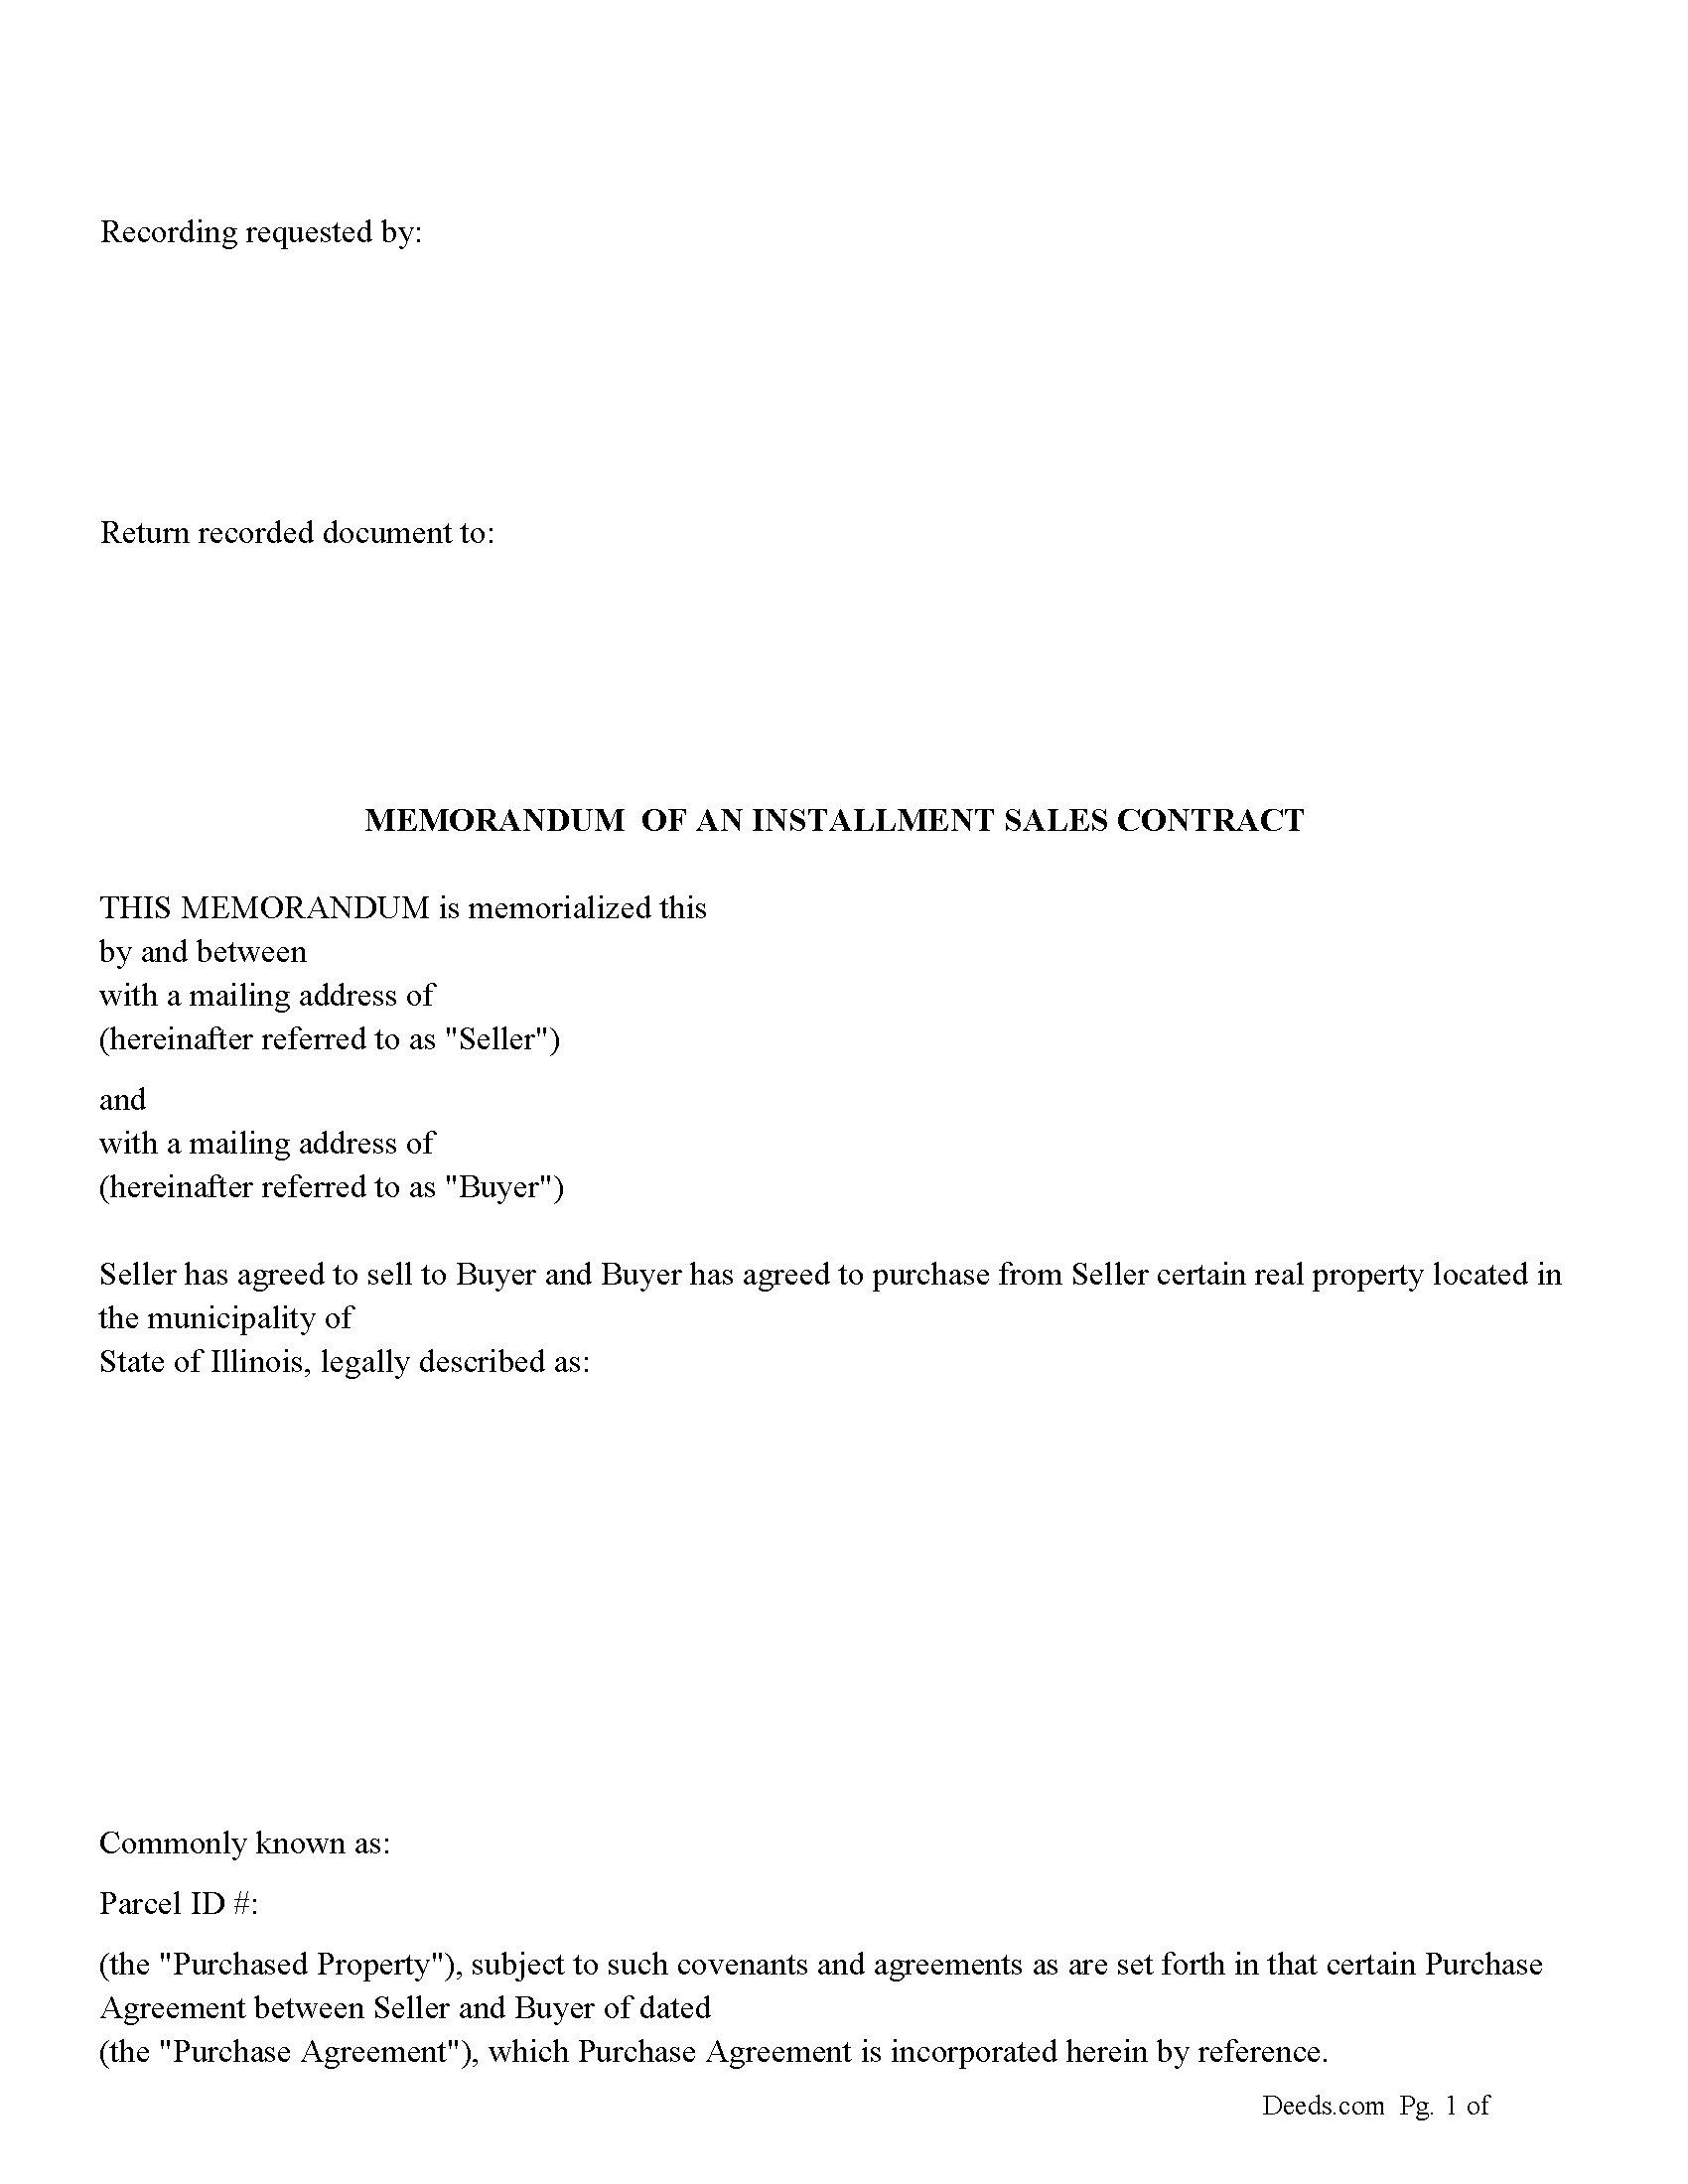 Ogle County Memorandum of an Installment Sales Contract Form